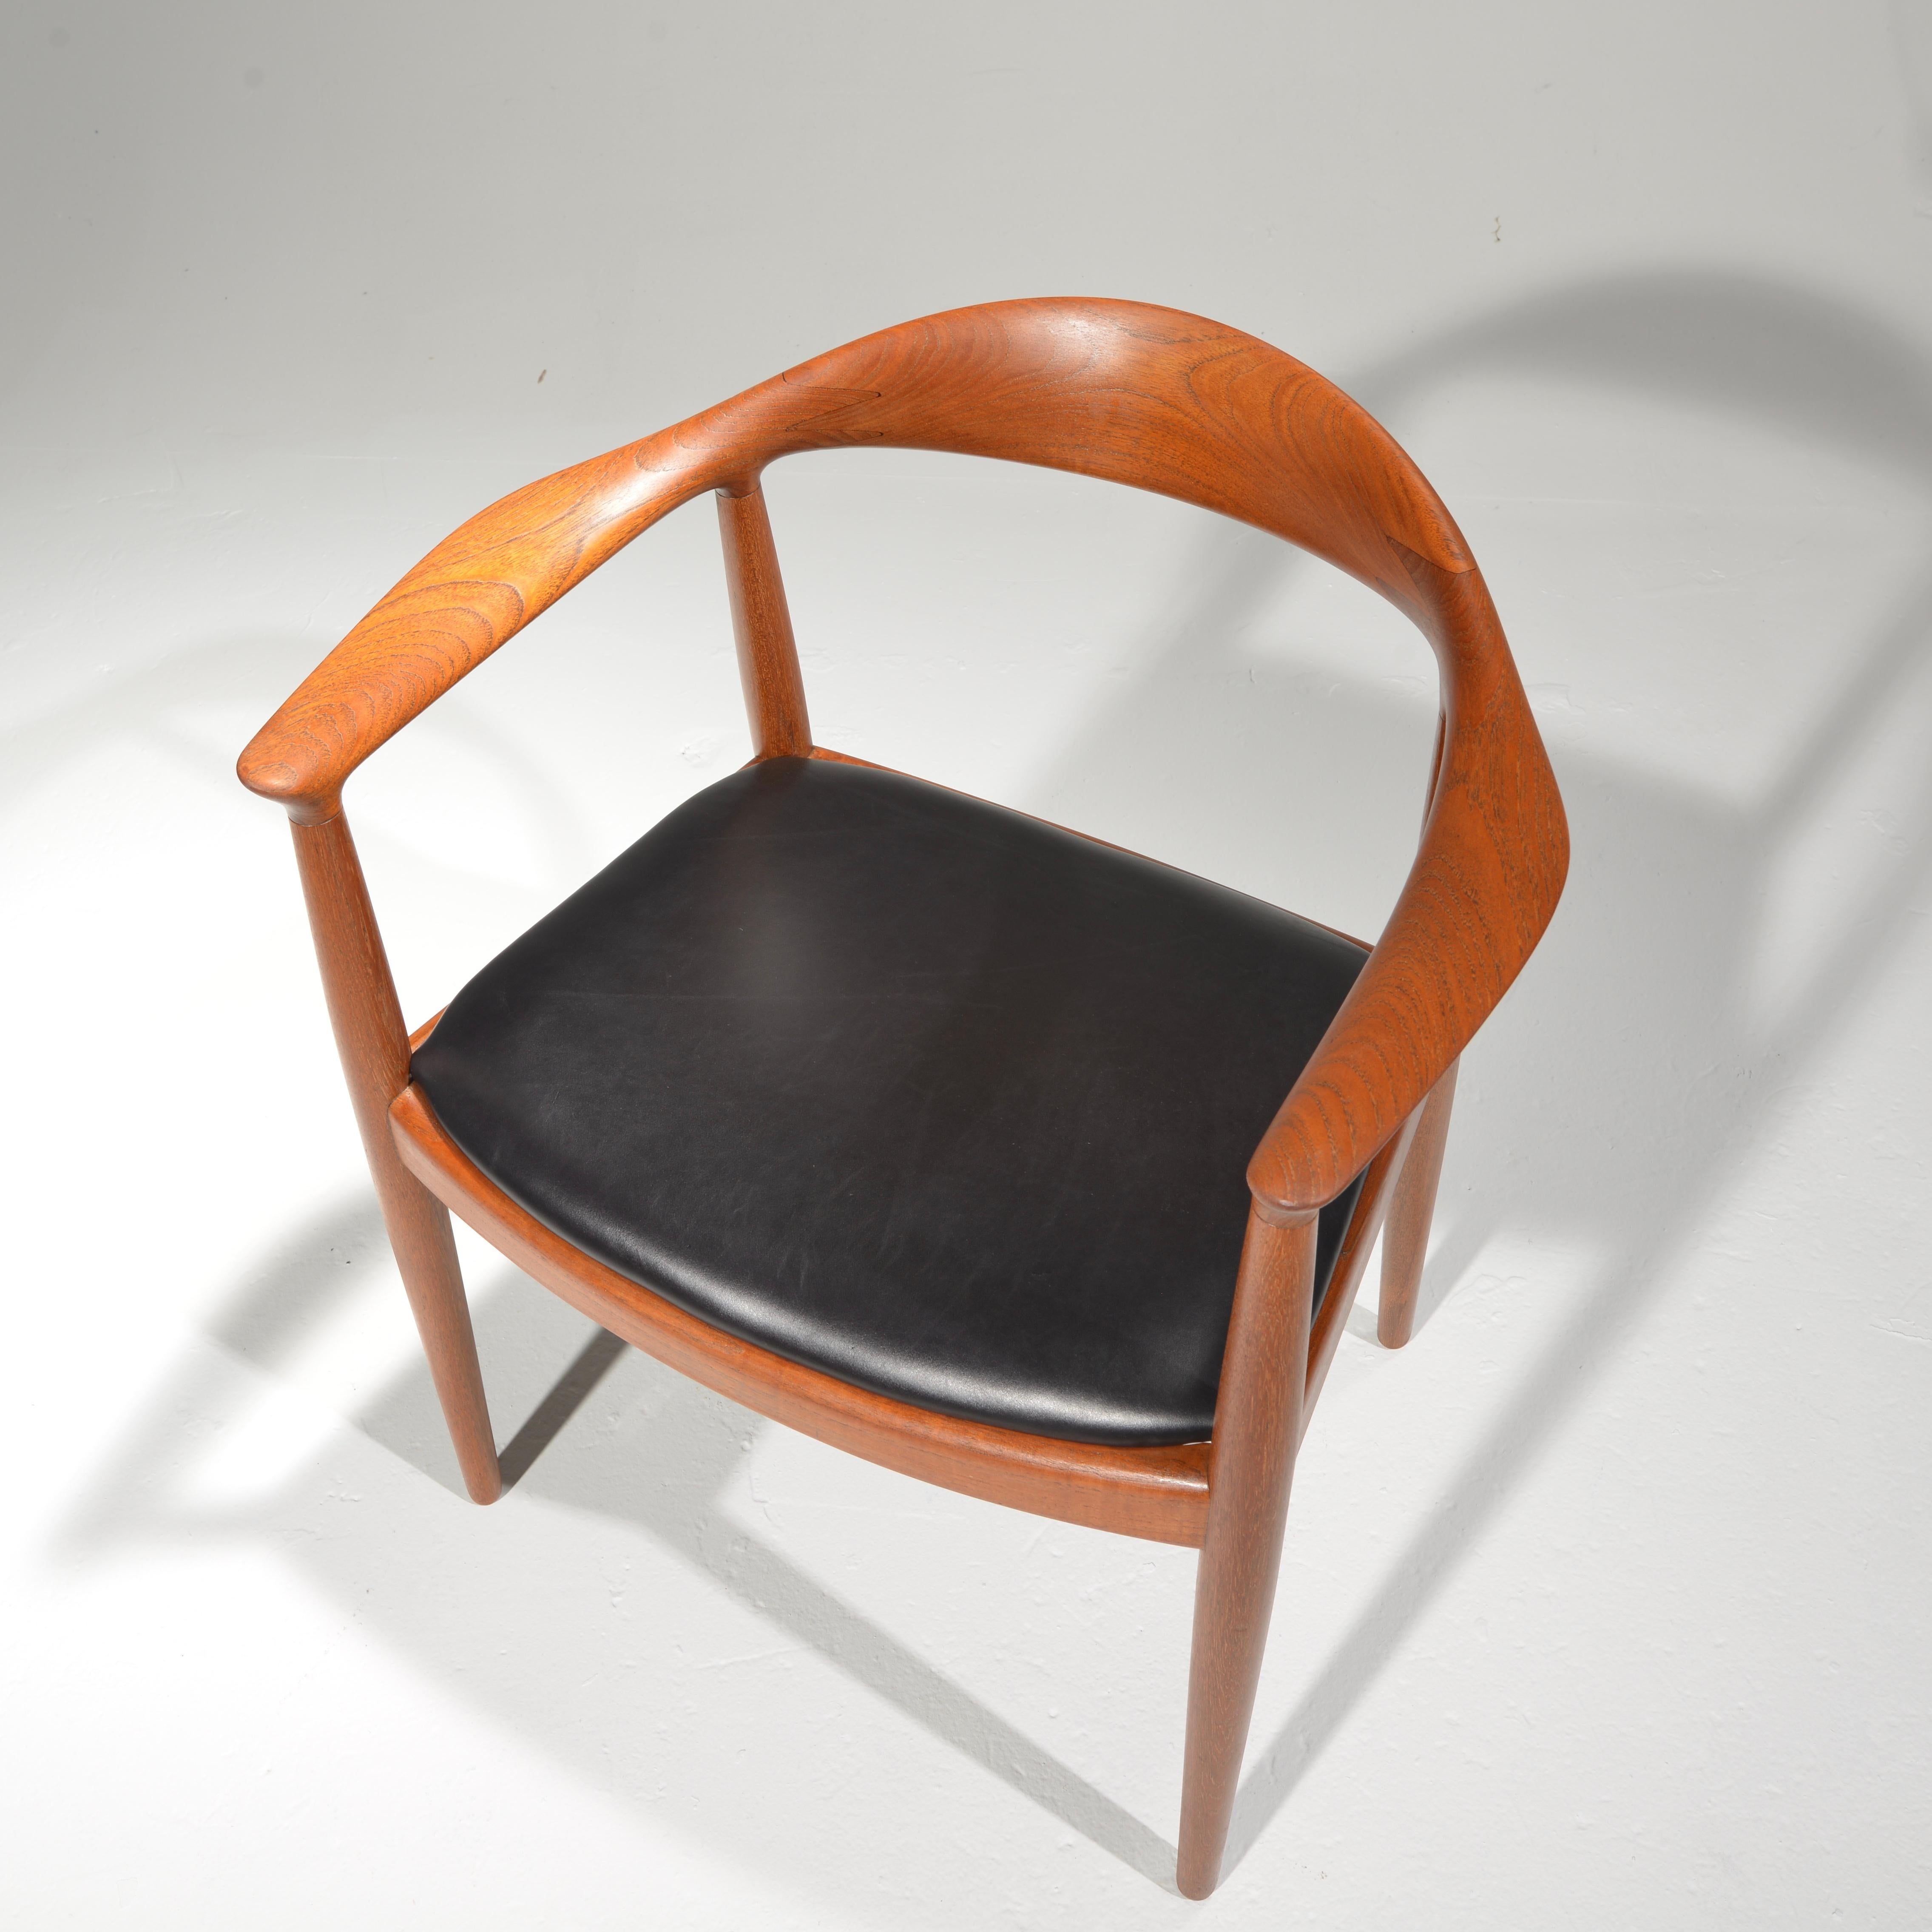 5 Hans Wegner for Johannes Hansen JH-503 Chairs in Teak and Leather For Sale 2